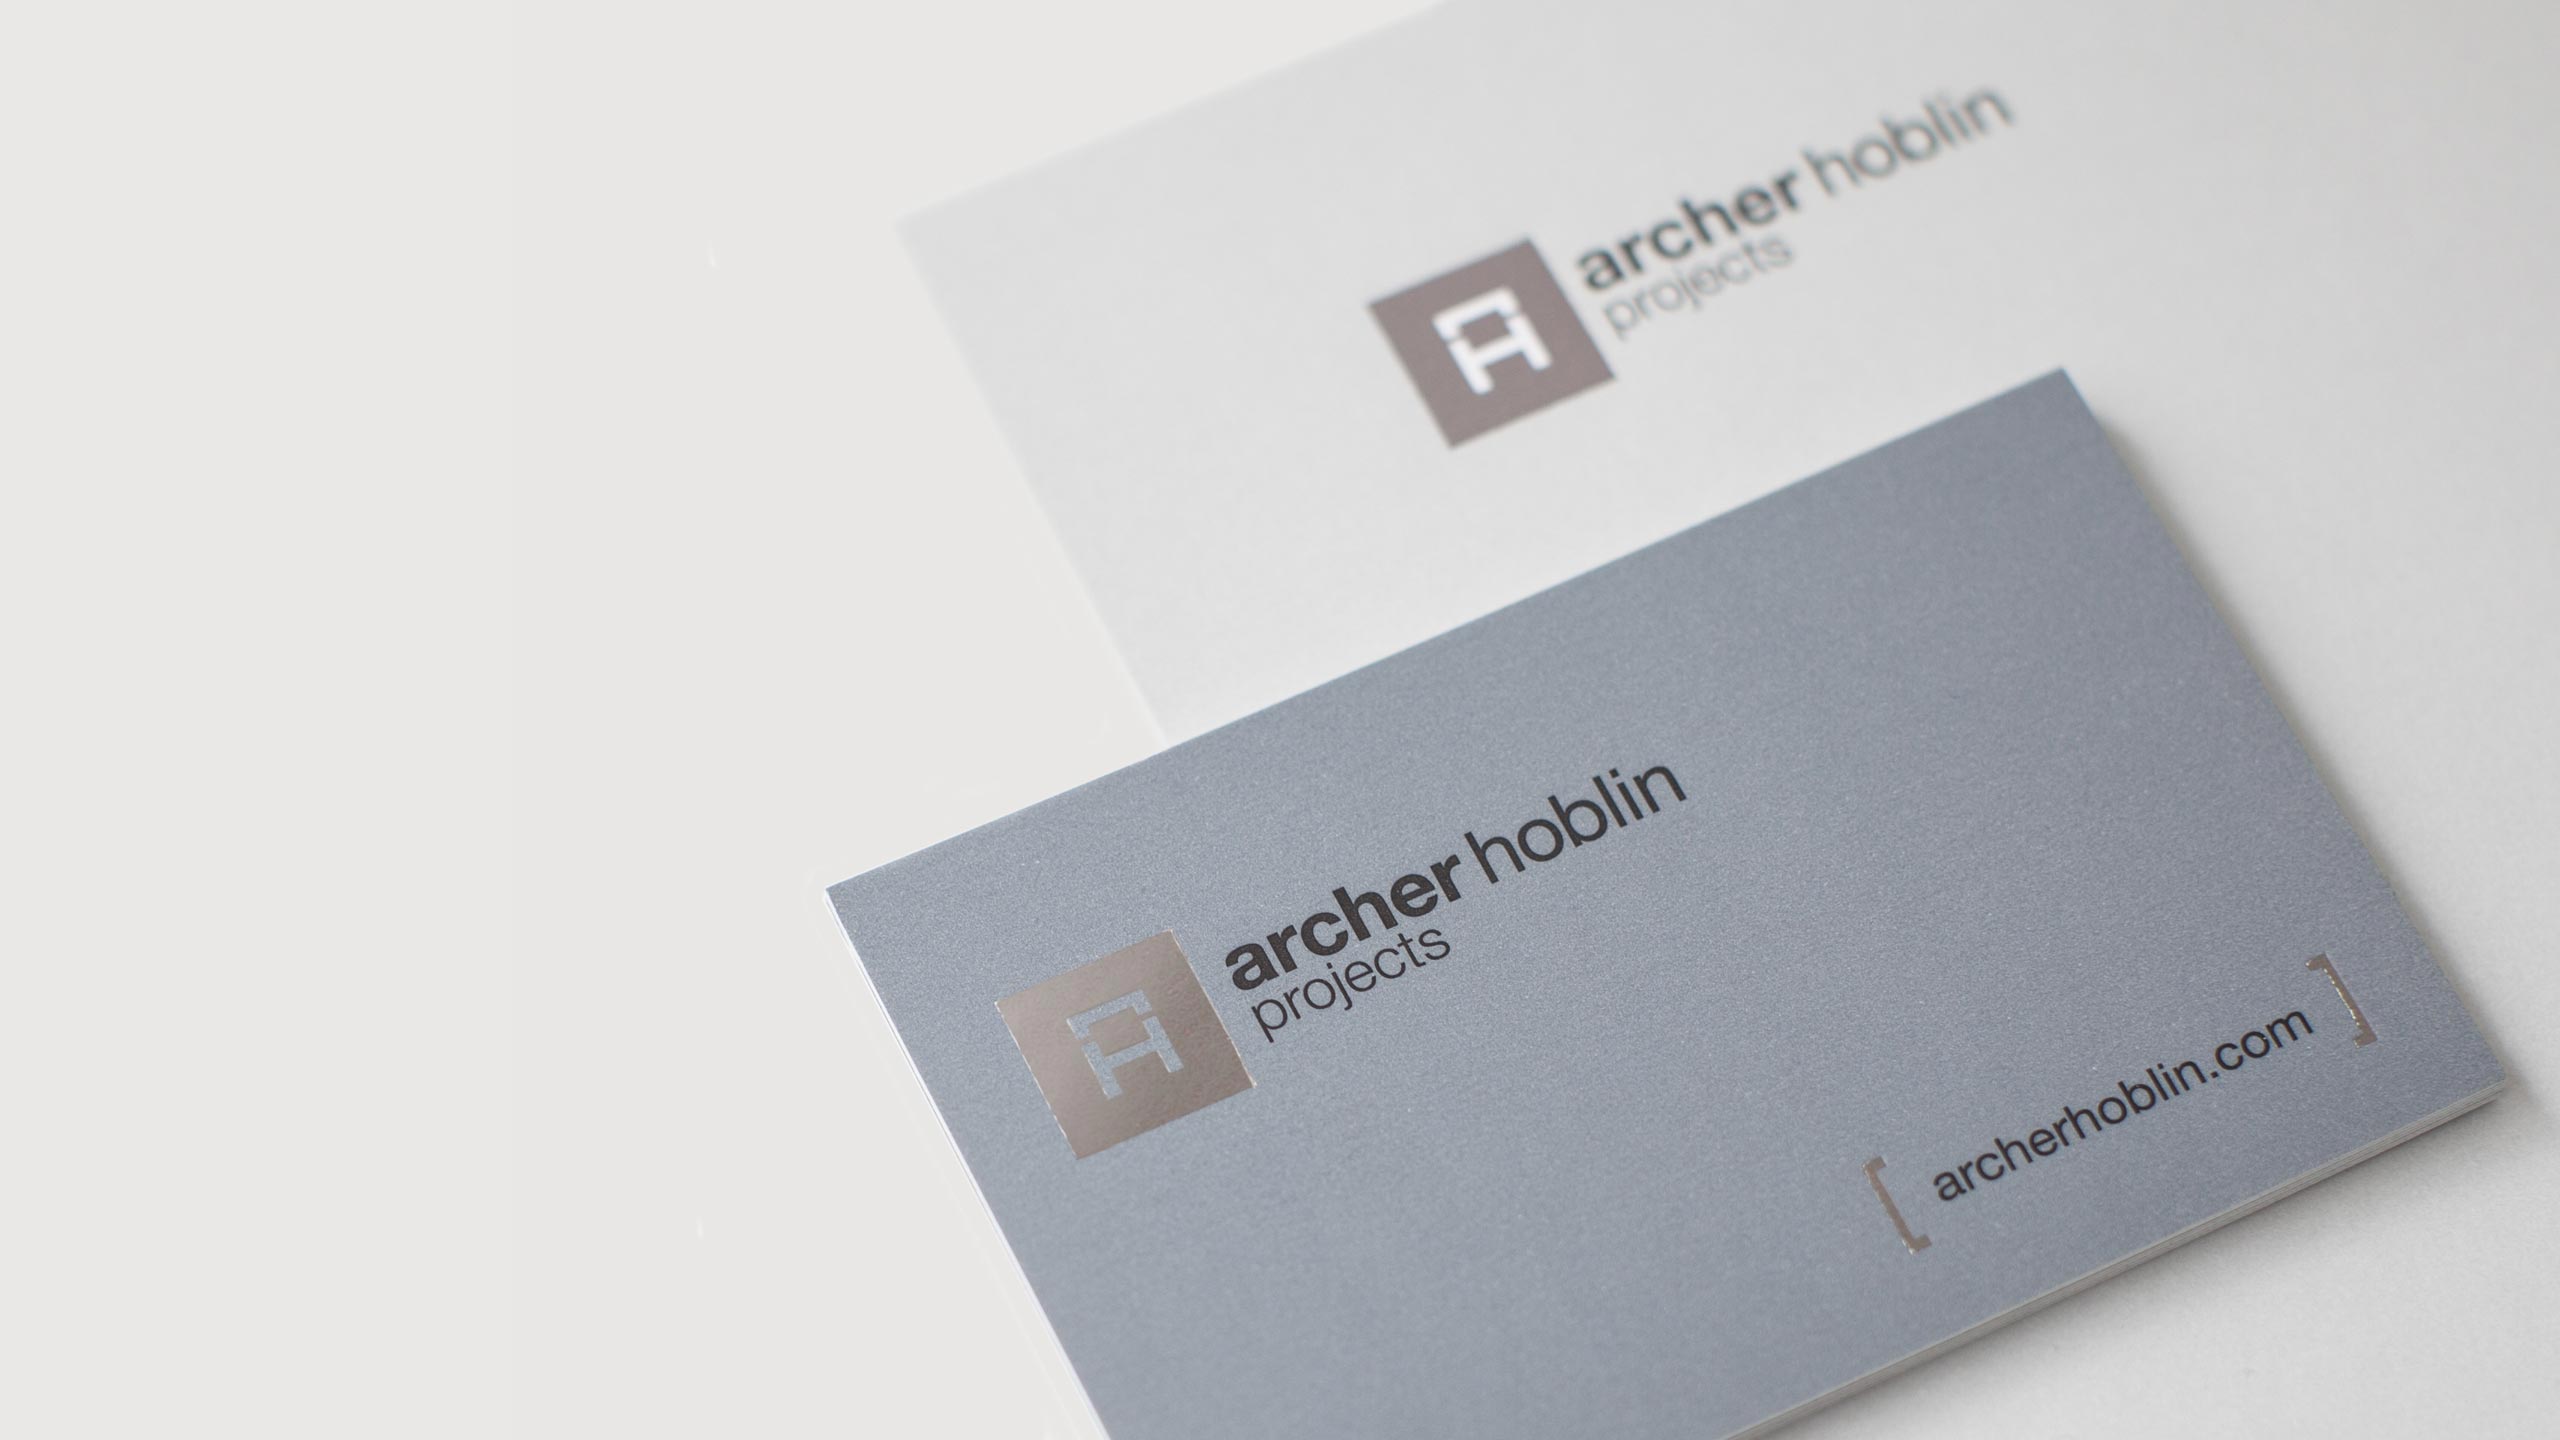 Archer Hoblin Business Cards